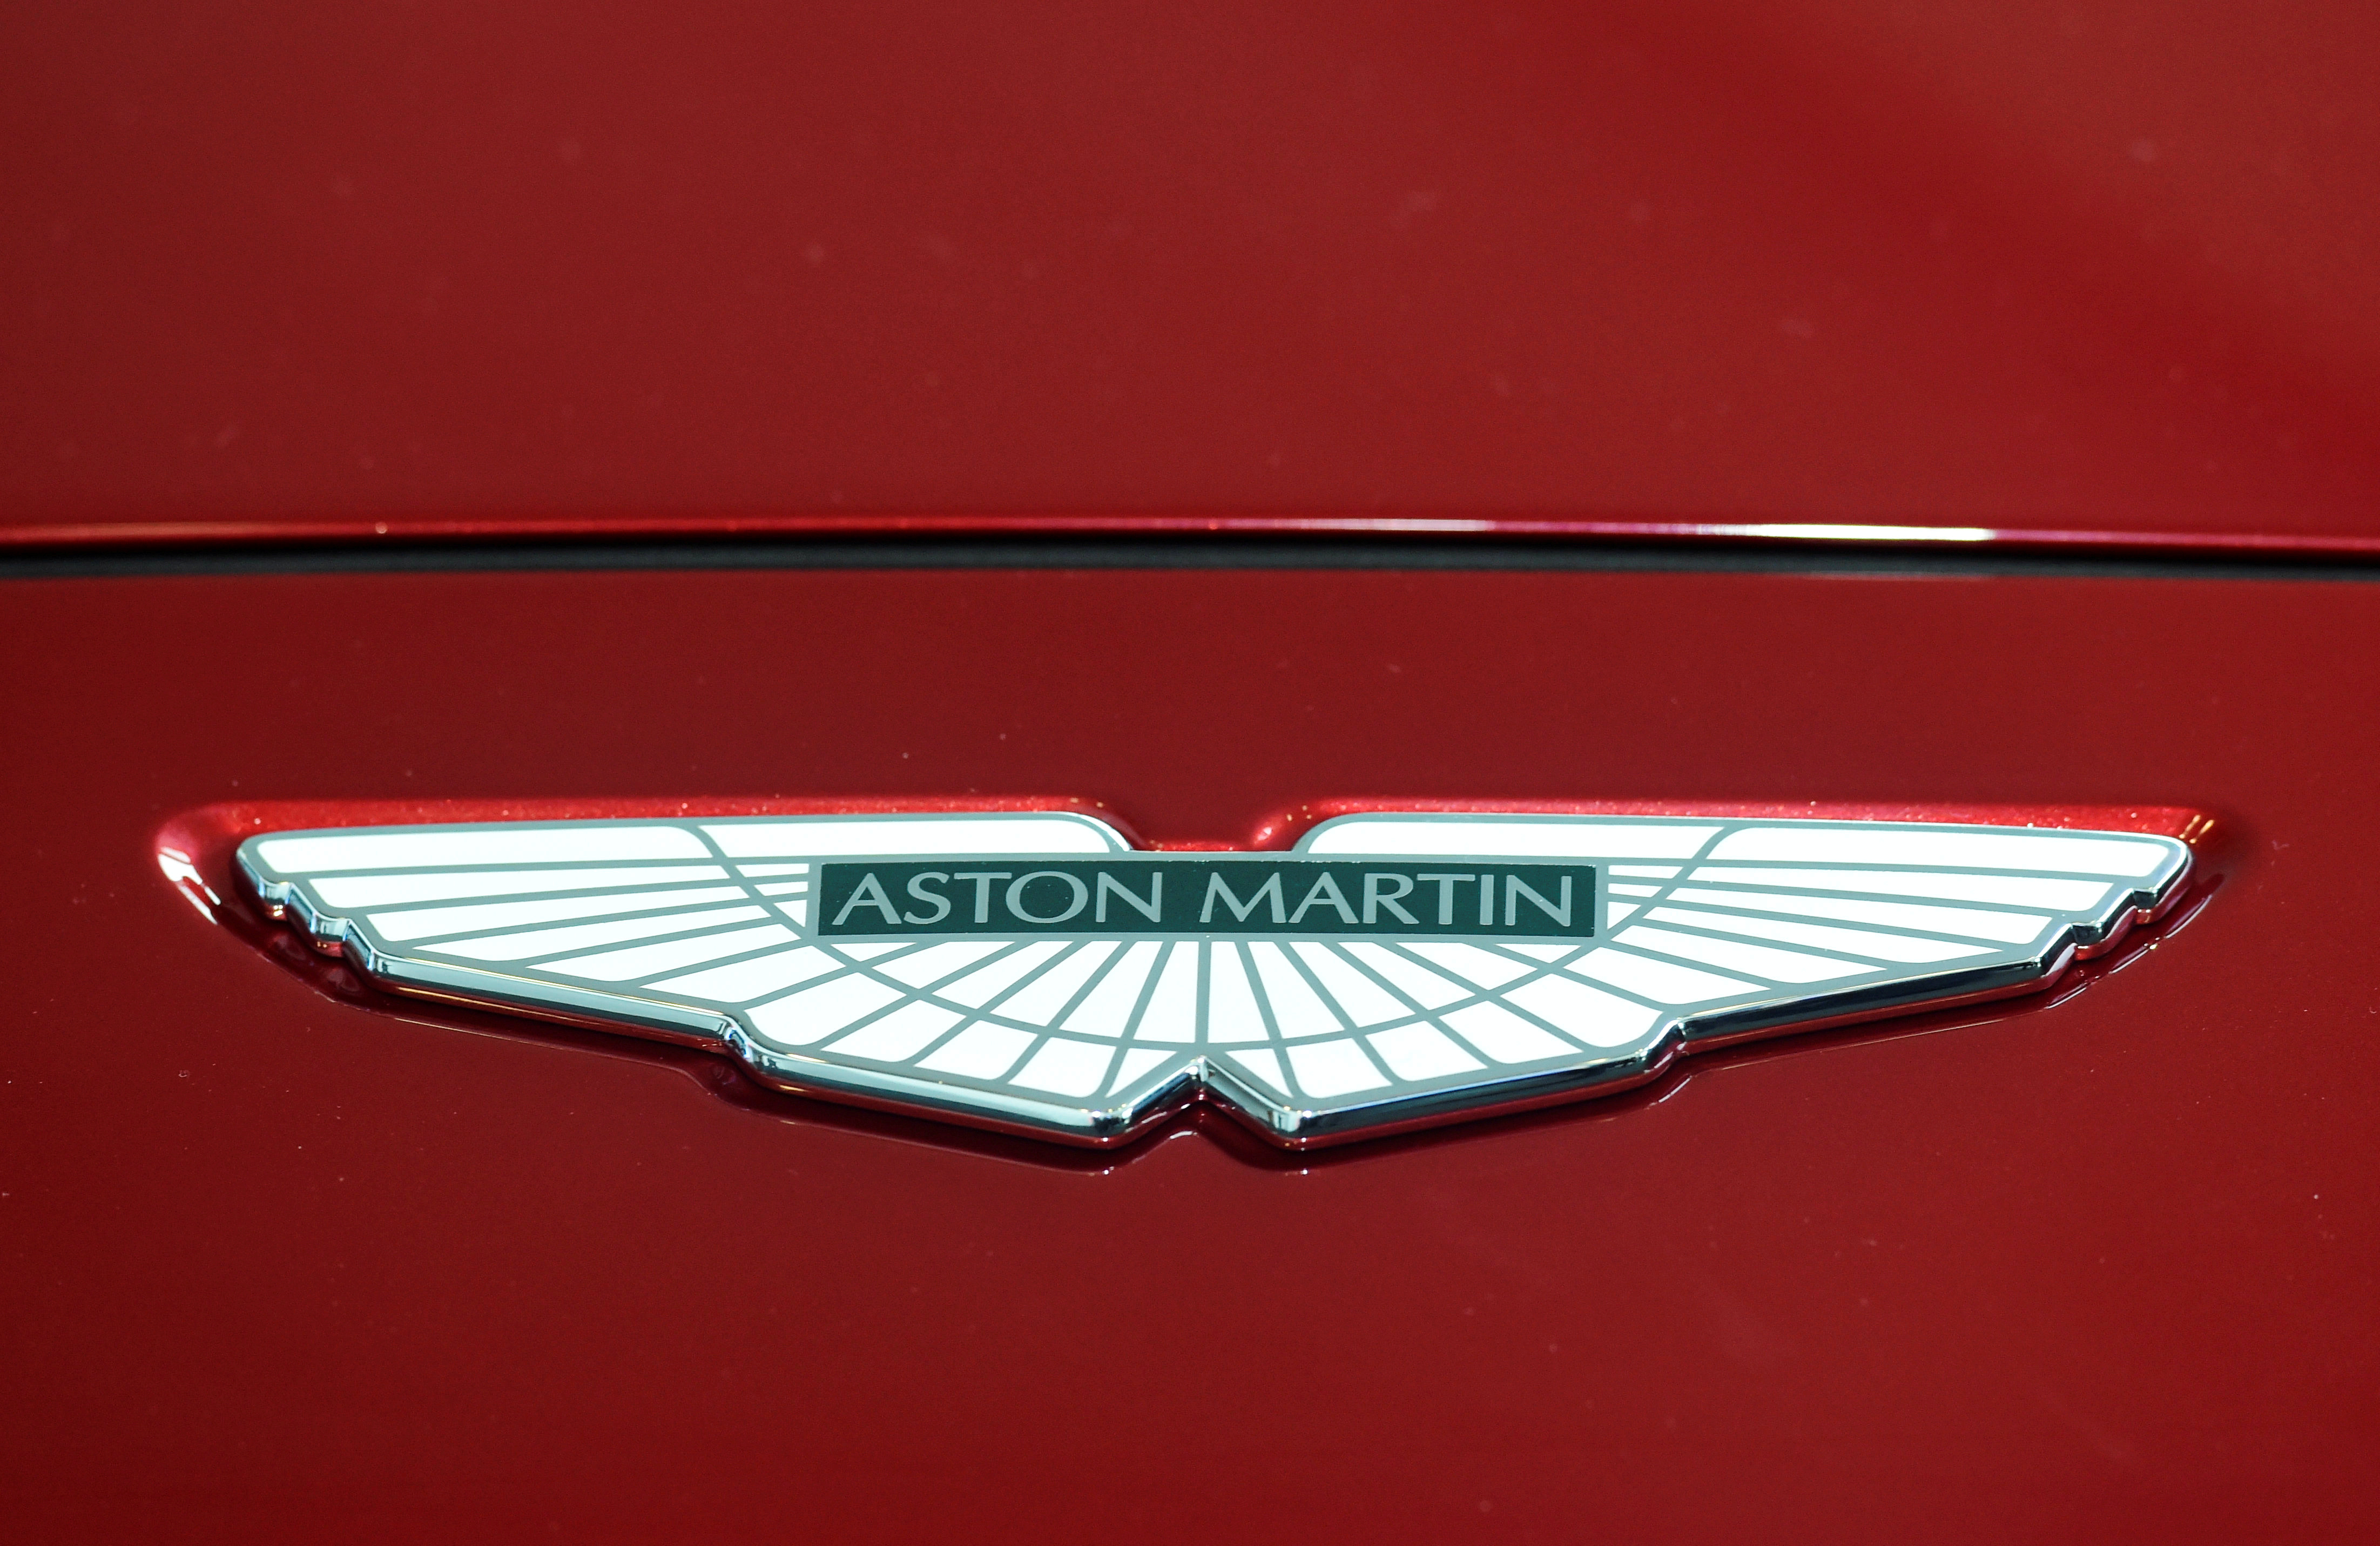 A logo on the new Aston Martin DBX